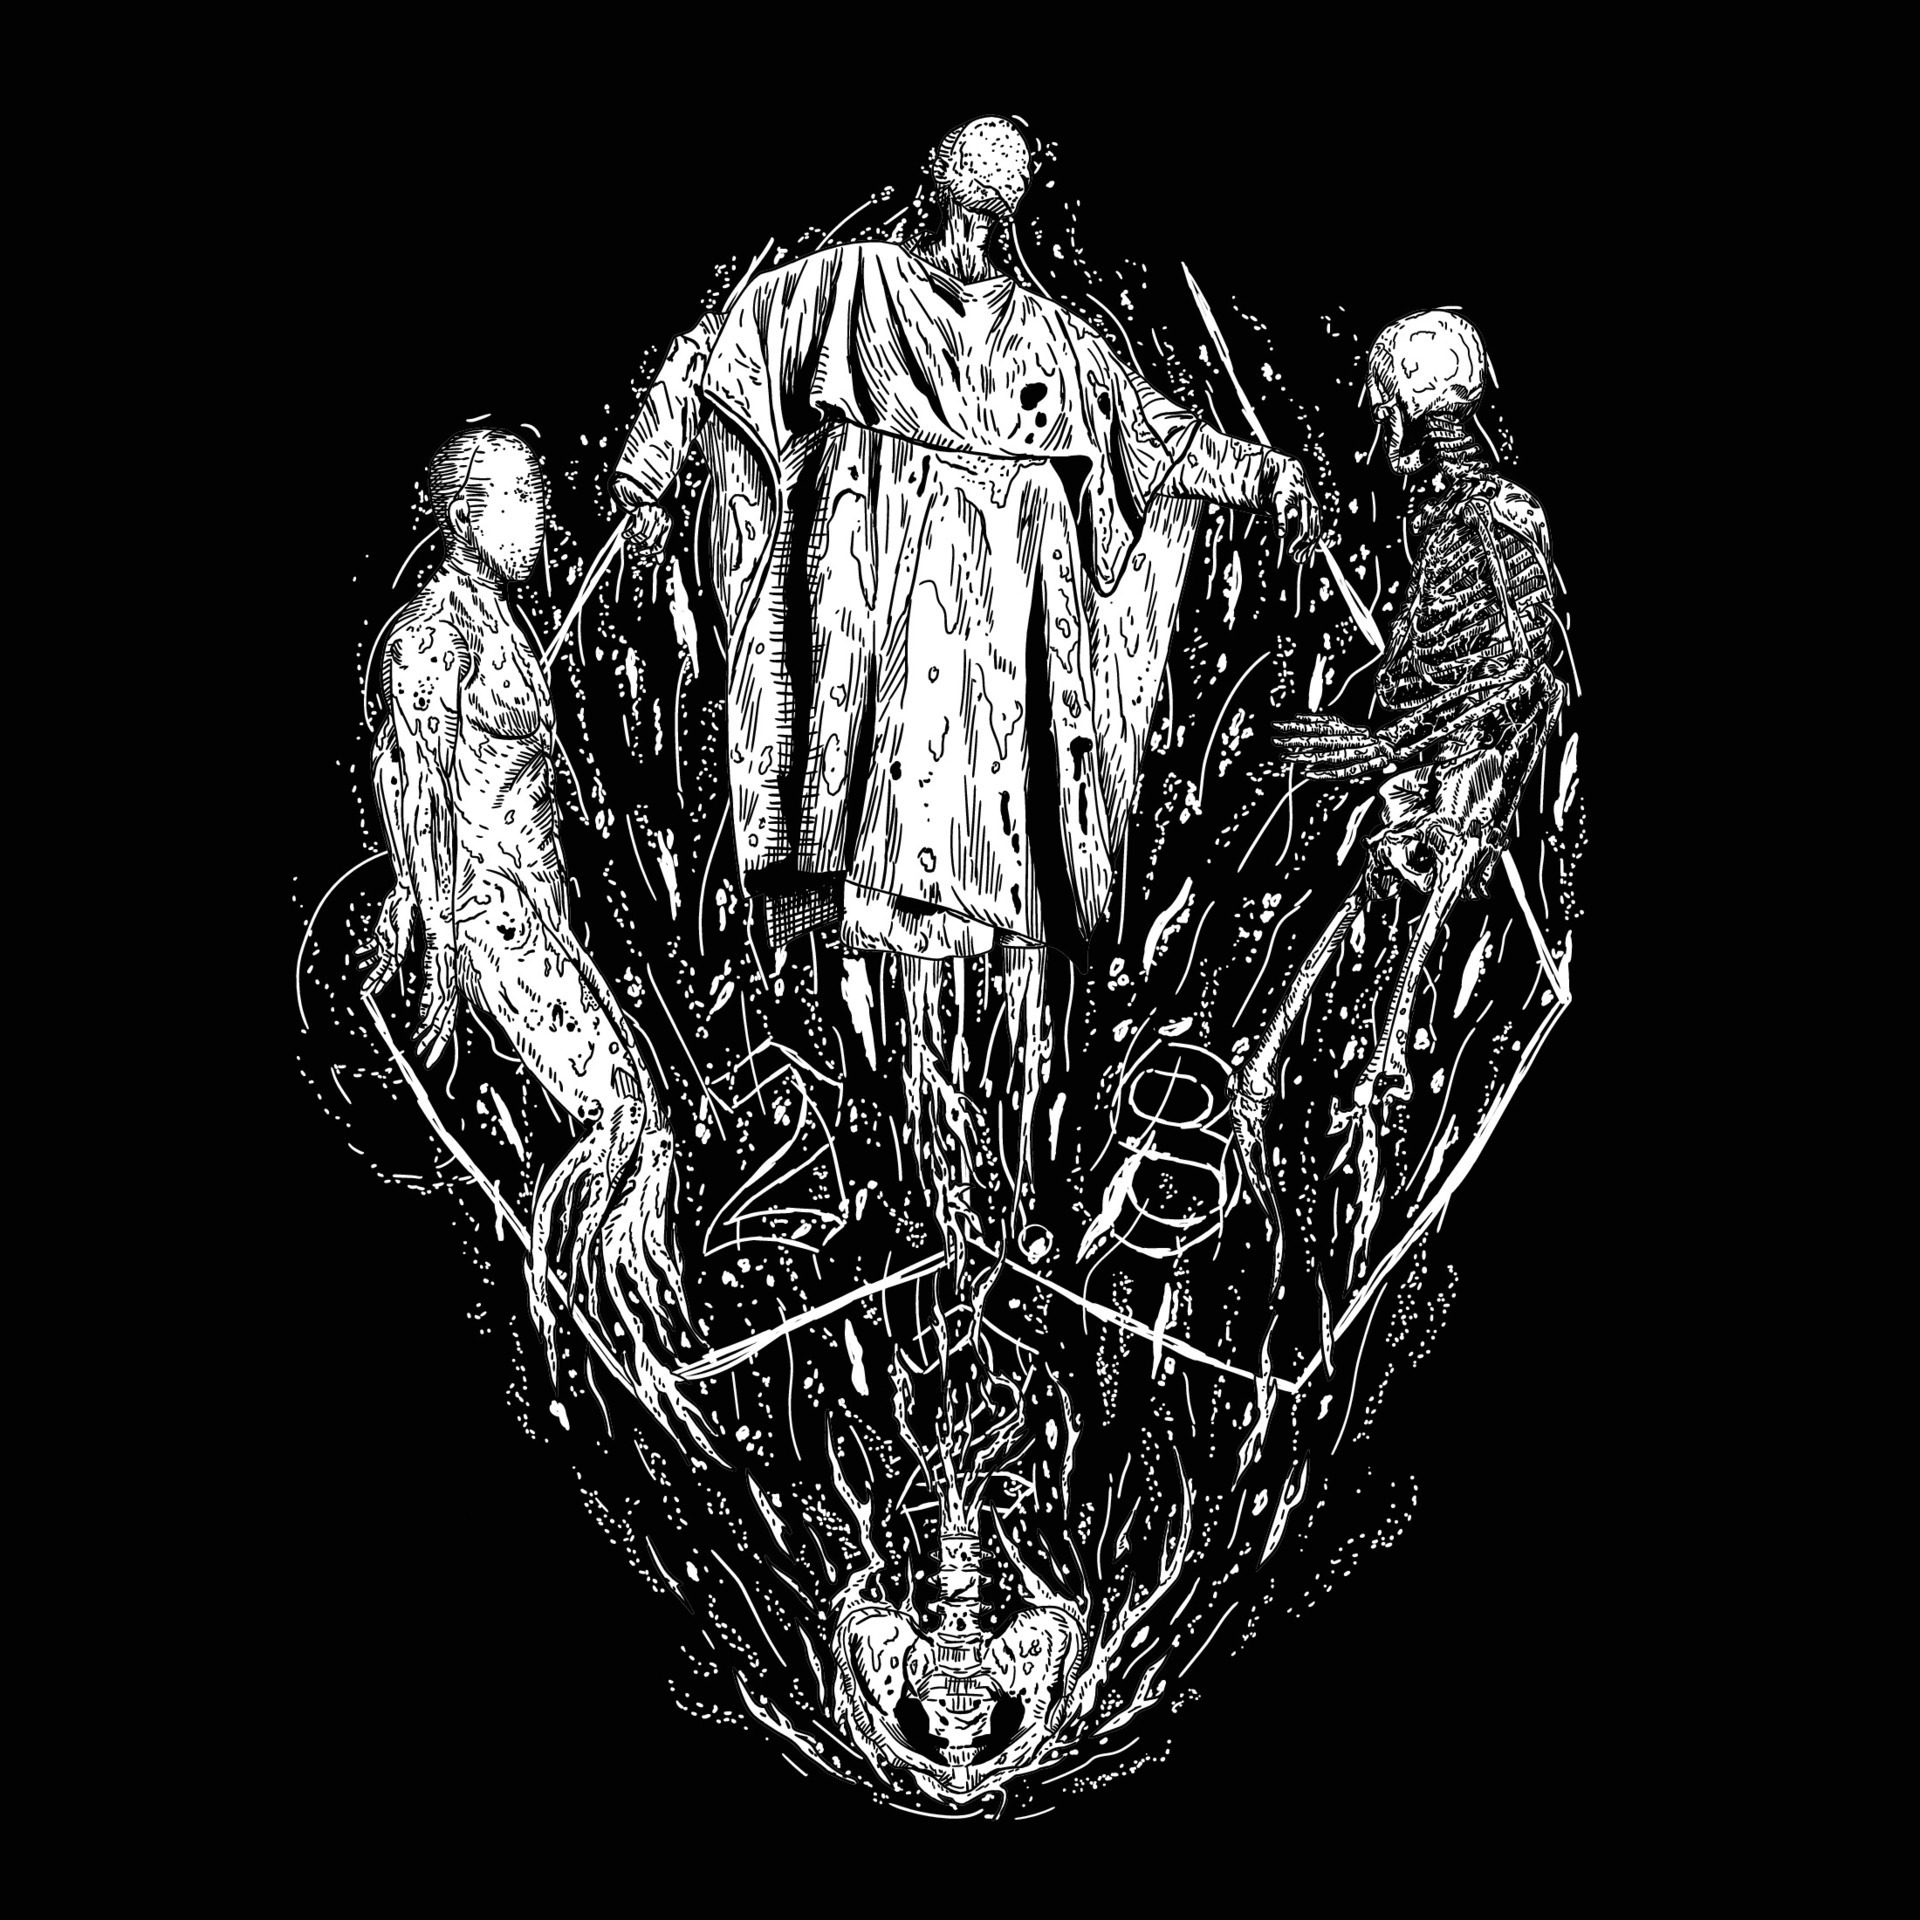 https://static.vecteezy.com/system/resources/previews/027/159/254/original/death-metal-illustration-of-three-people-floating-dark-art-style-horror-illustration-vector.jpg